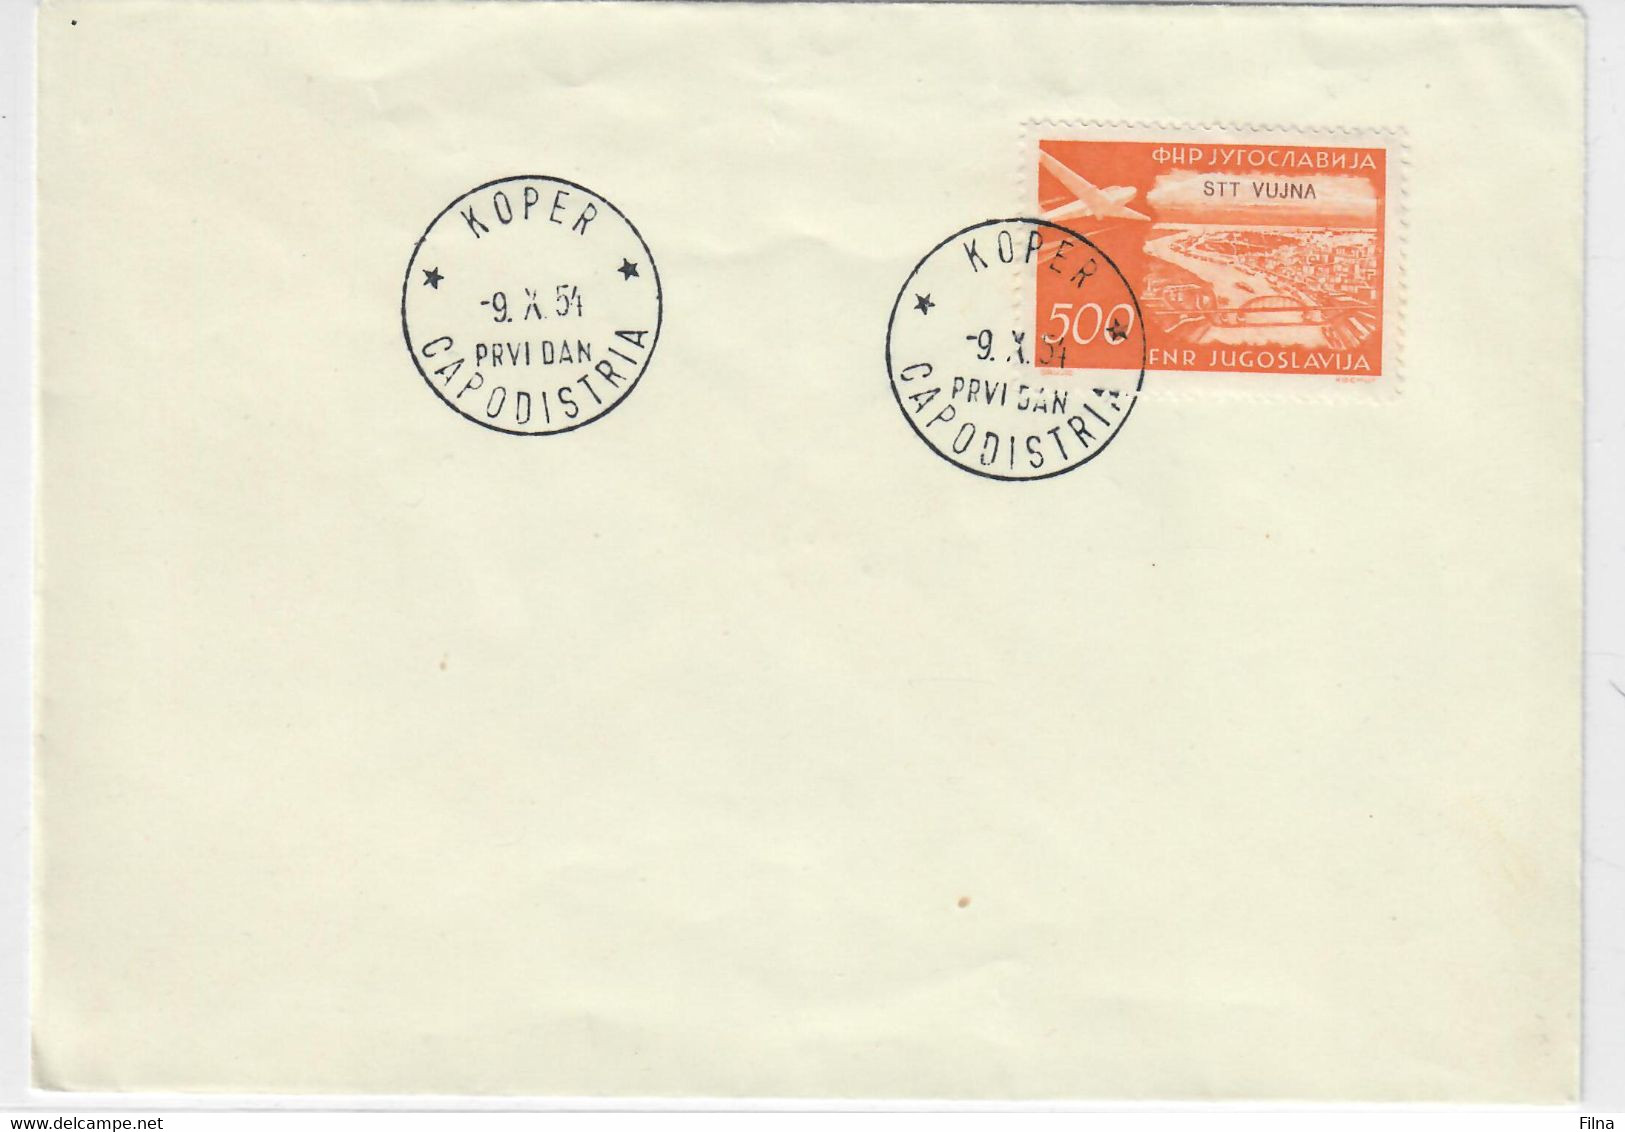 TRIESTE B VUJA 1954  - POSTA AEREA 500 D. ARANCIO -  FDC - Storia Postale